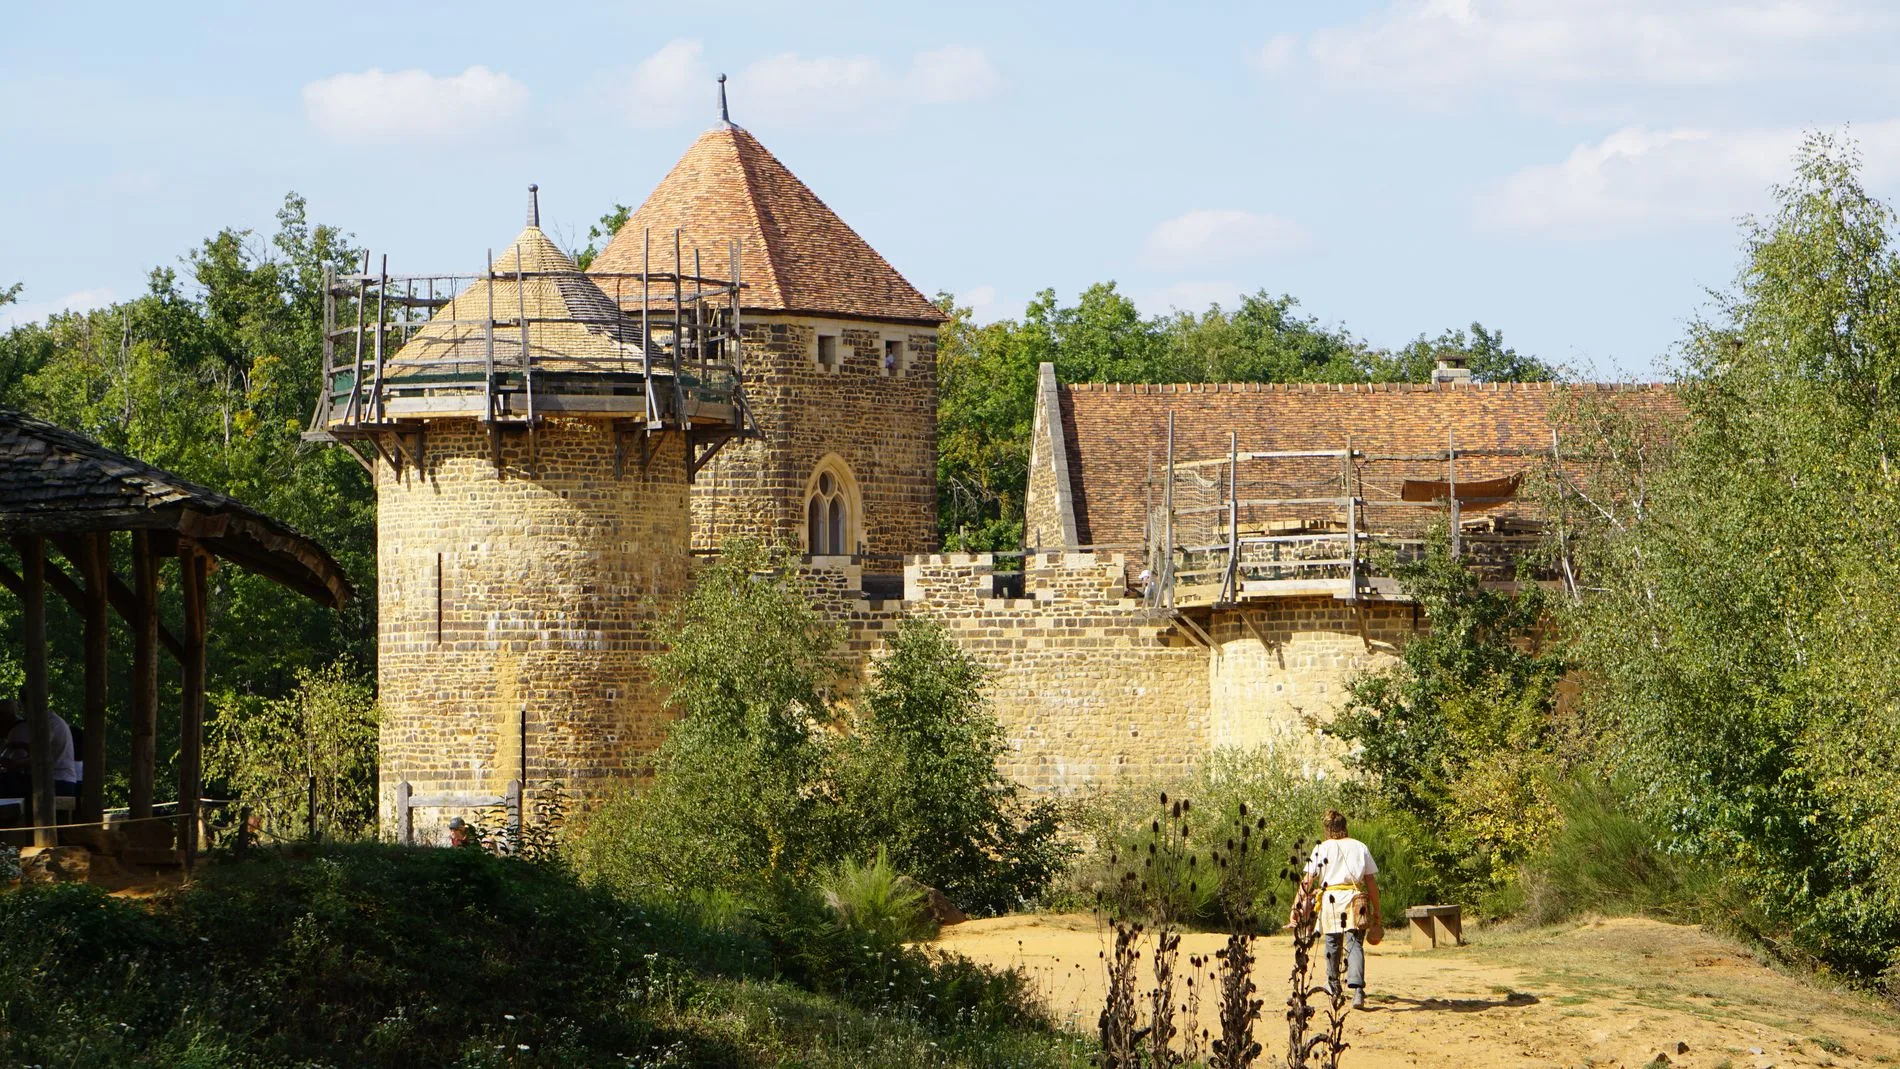 Medieval construction site of Guédelon